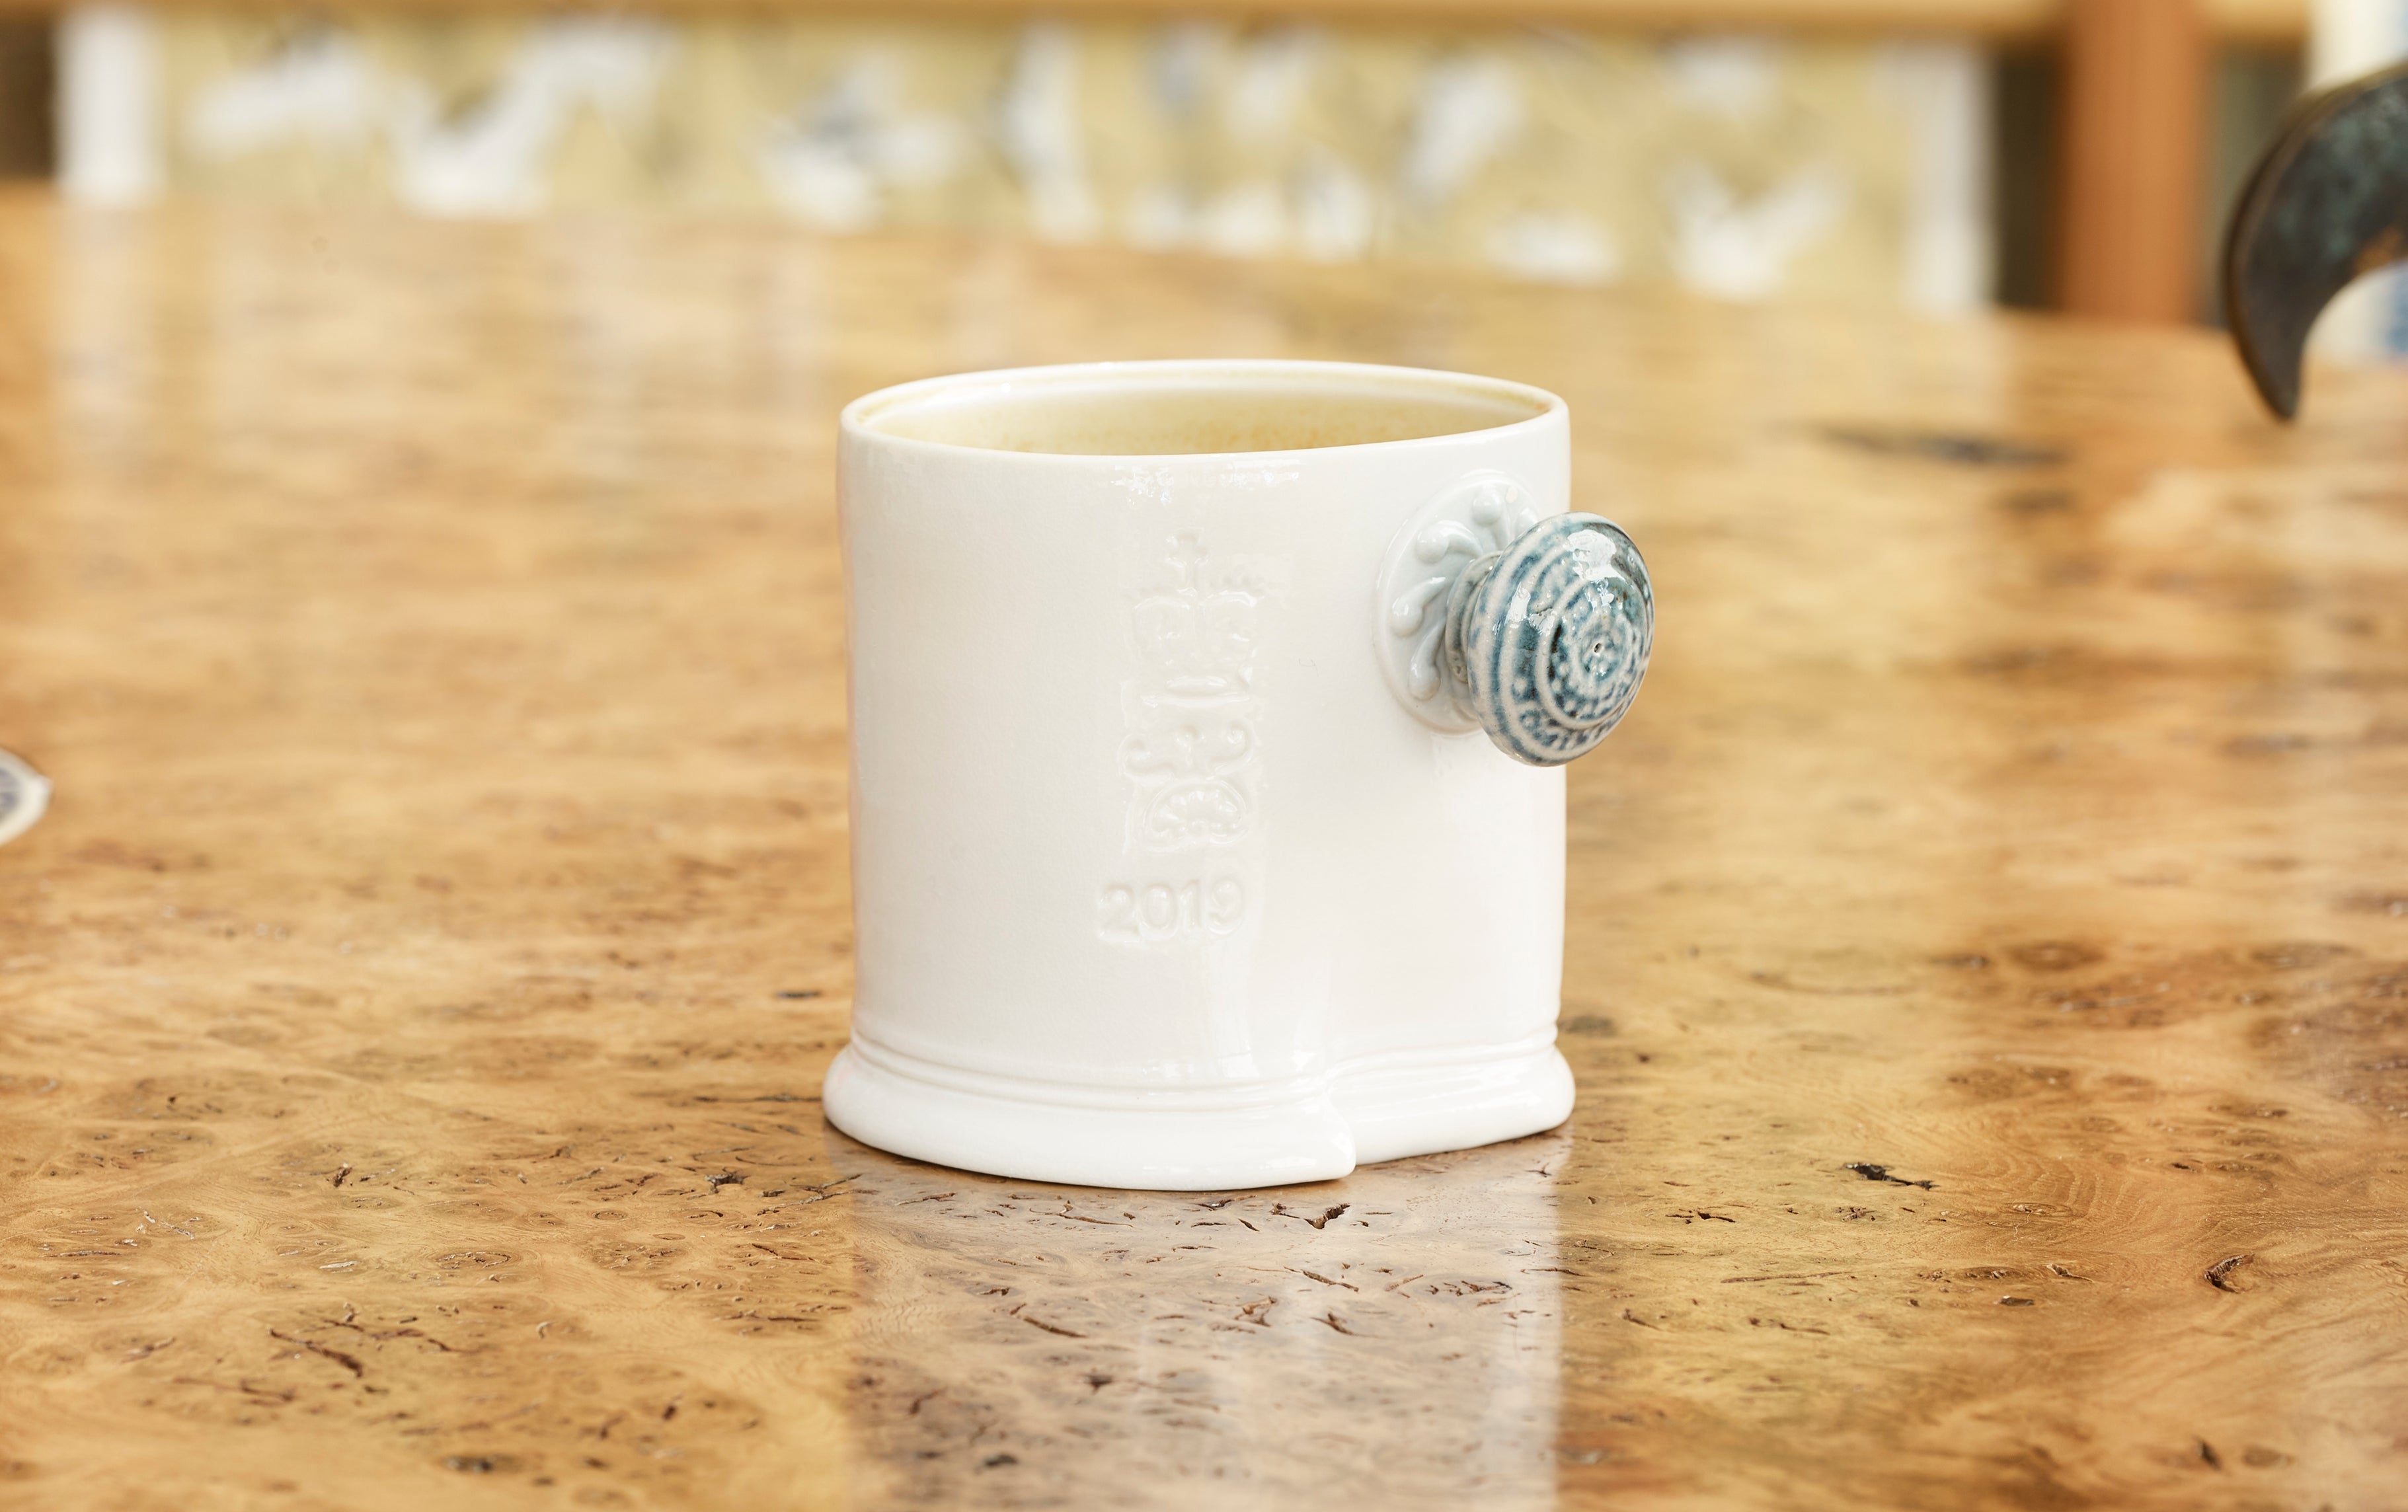 Steve Harrison Ceramic Desk Cup, No.110 White porcelain with blue knob